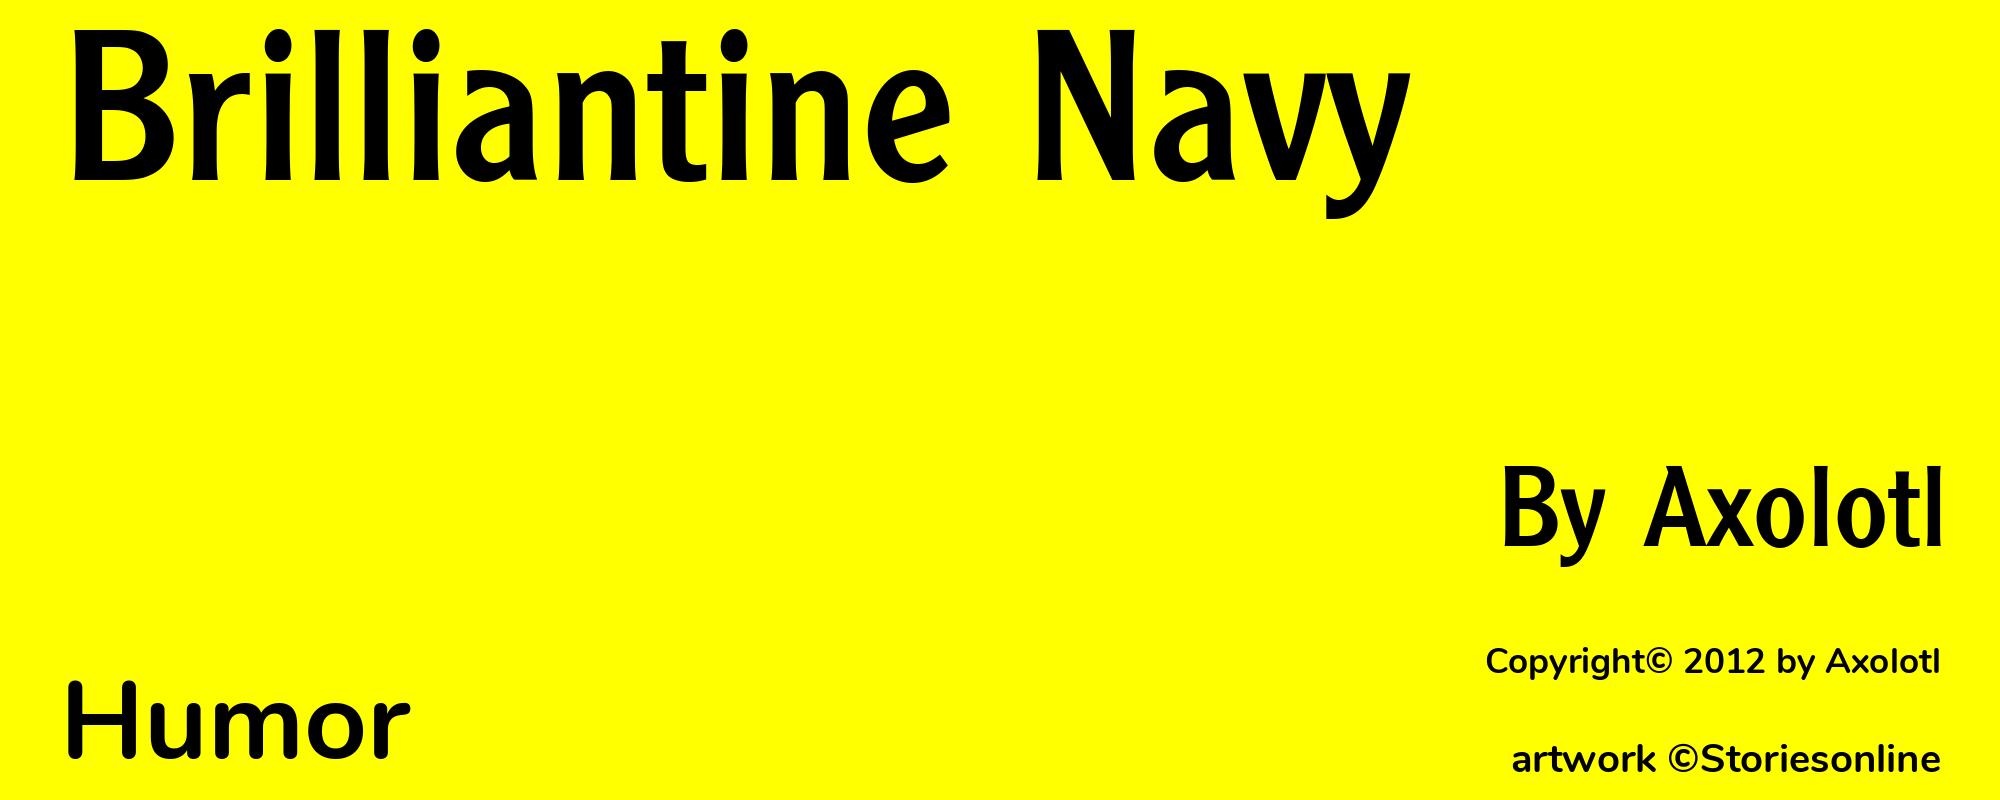 Brilliantine Navy - Cover